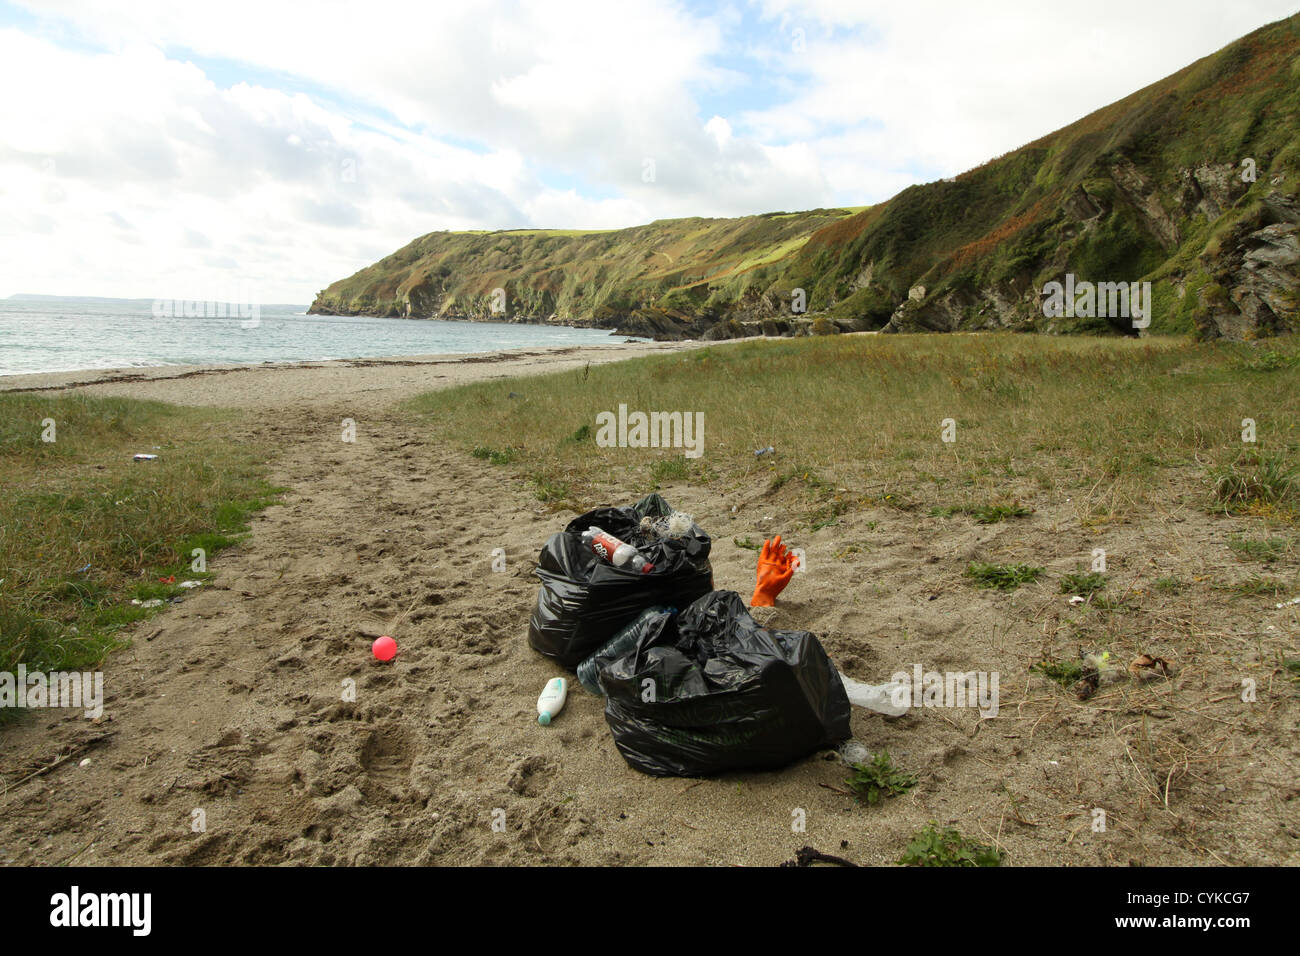 Litter strewn on beach, Cornwall, UK Stock Photo